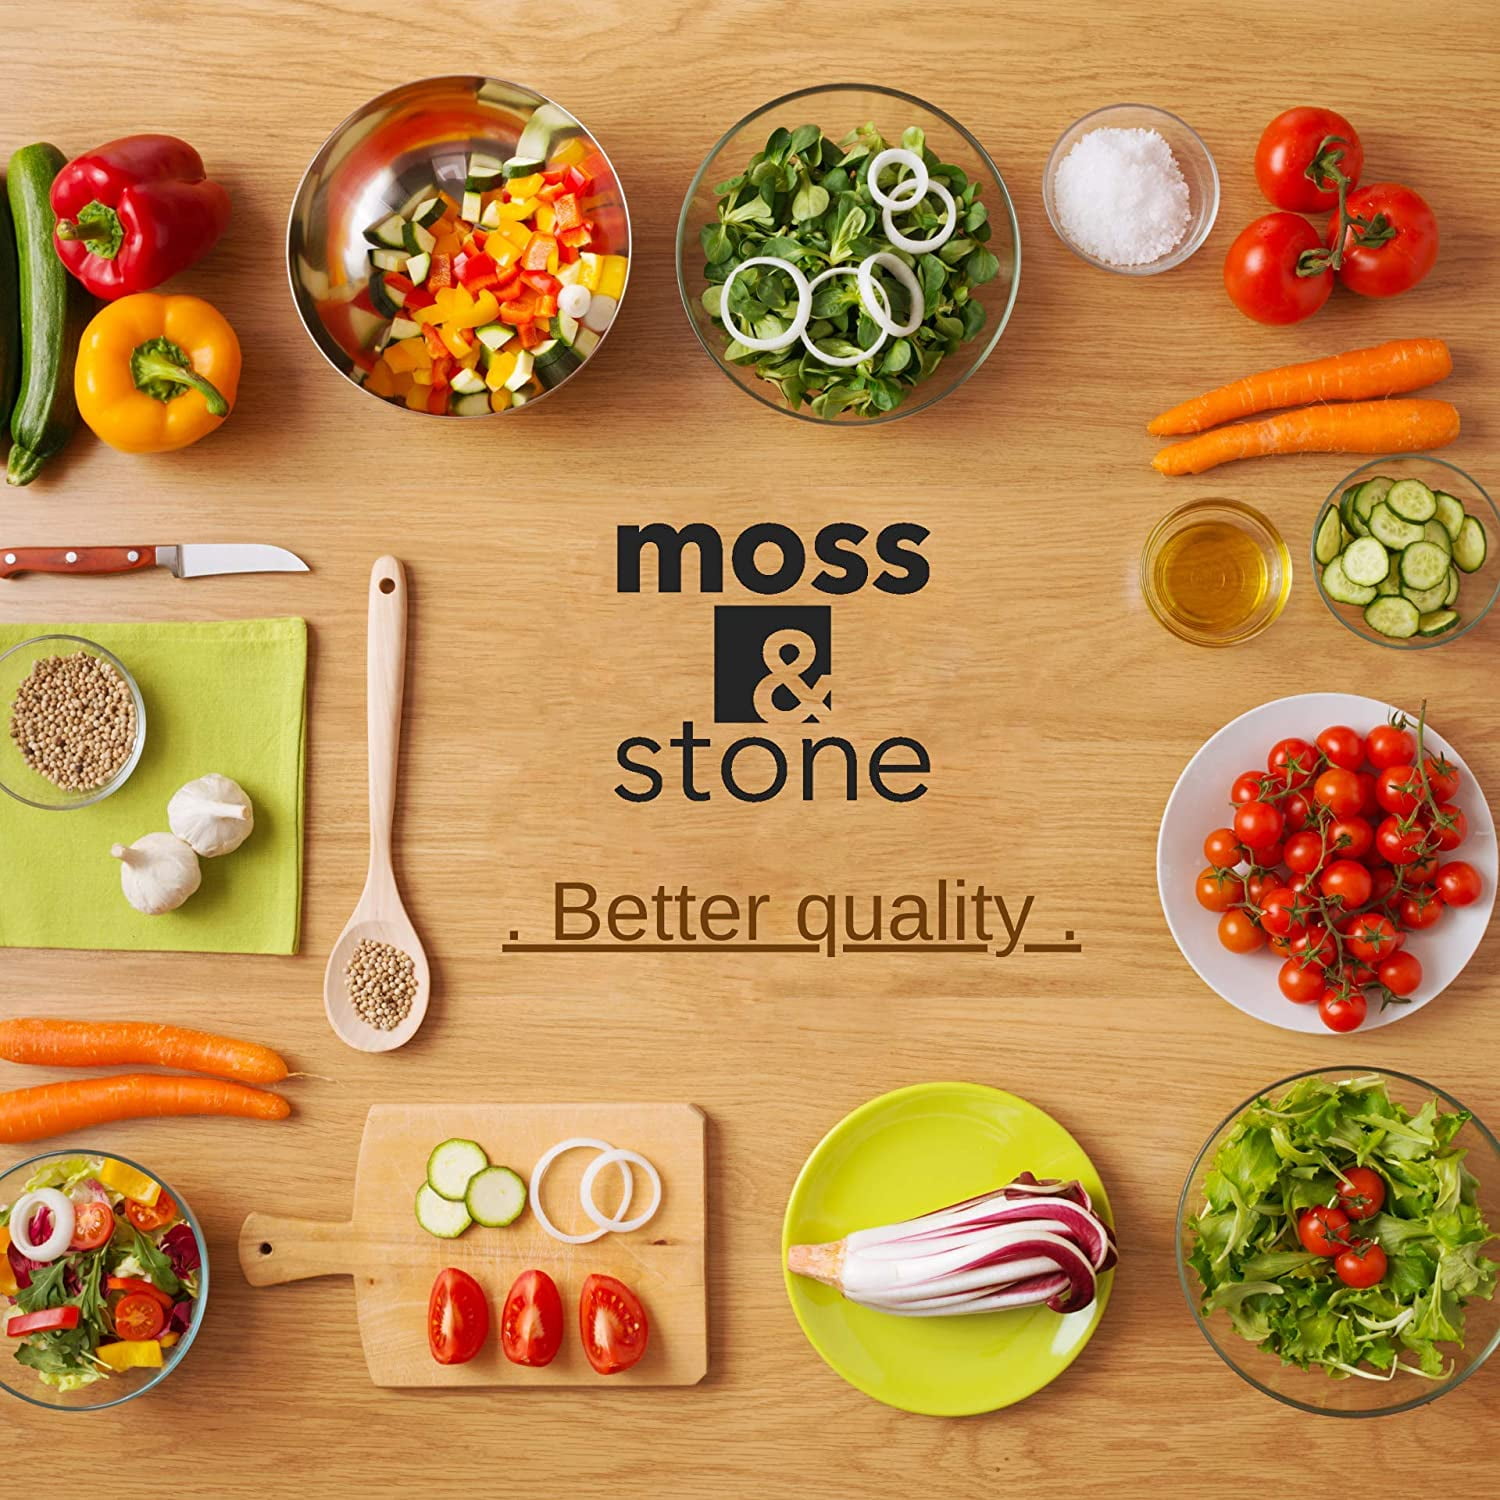  Moss & Stone Arrocera digital multicocina eléctrica pequeña de  4 a 8 tazas, 10 ajustes preprogramados, marrón y blanco / vaporizador de  alimentos, lenta con vaporizador para verduras, olla antiadherente de